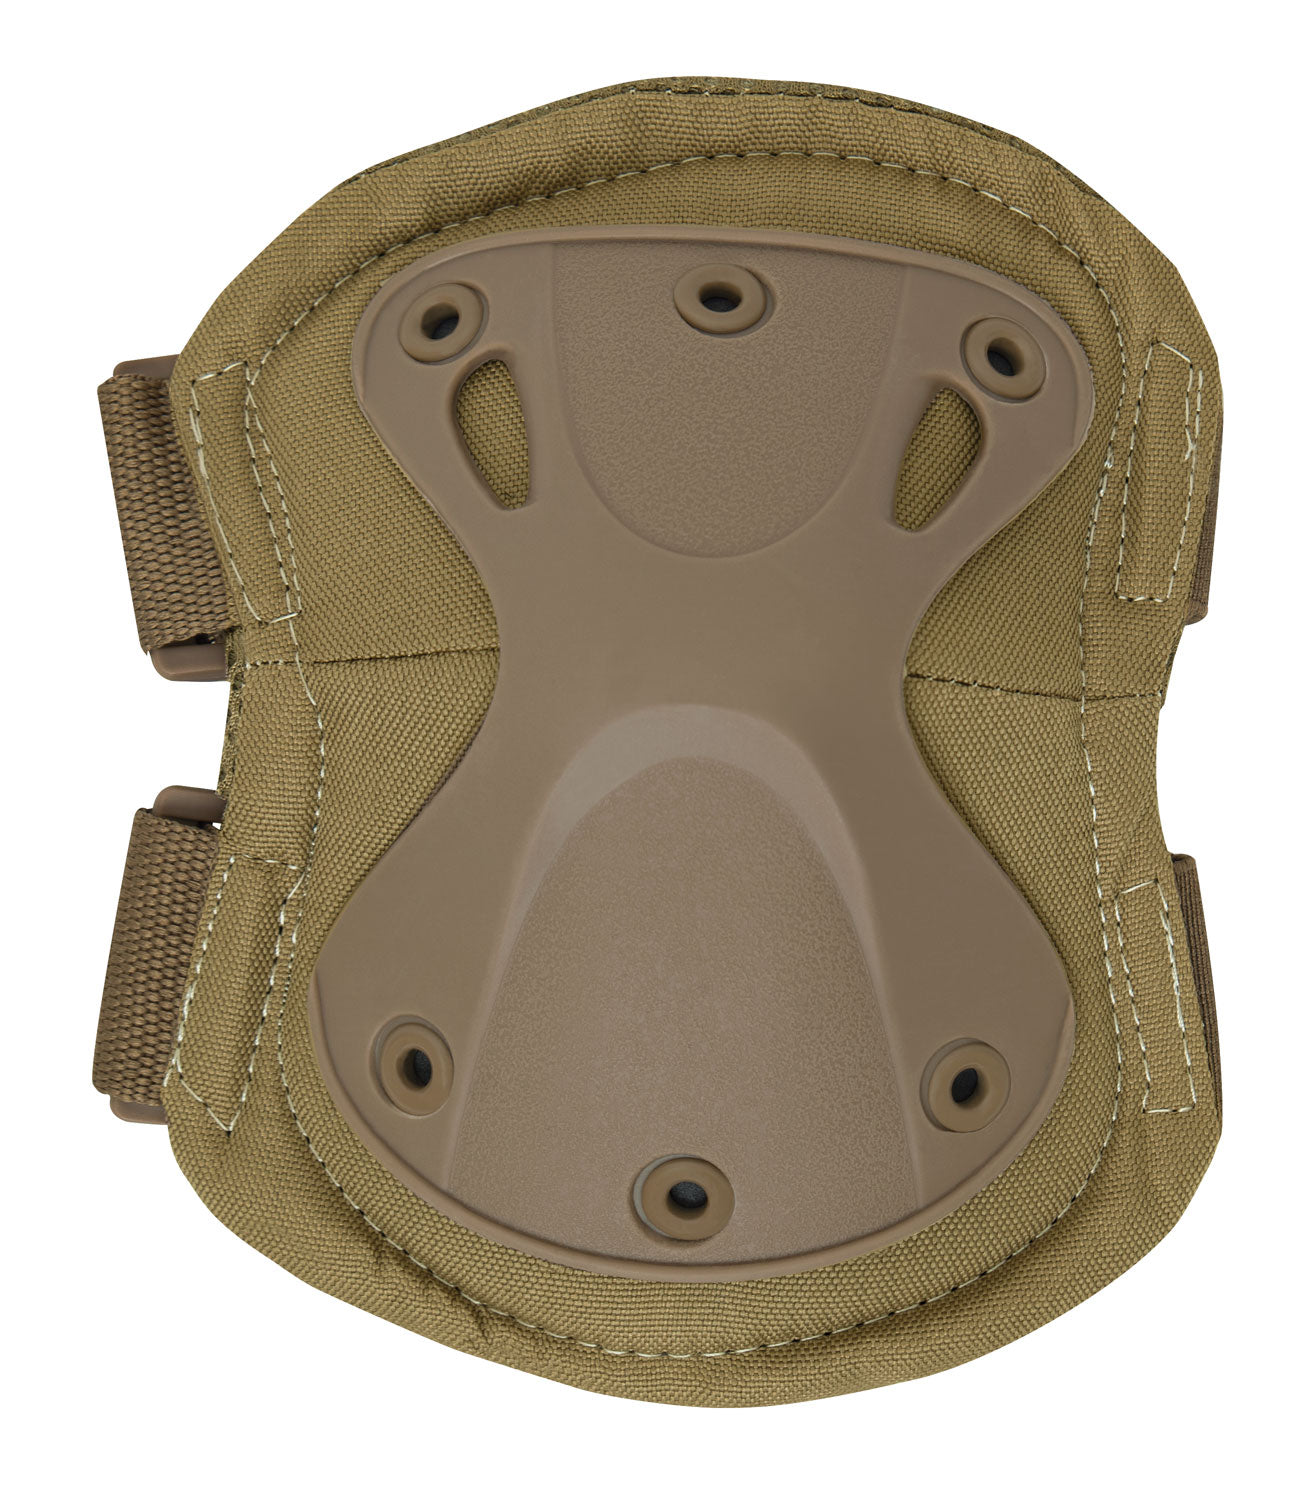 Milspec Low Profile Tactical Elbow Pads Sneak Previews MilTac Tactical Military Outdoor Gear Australia